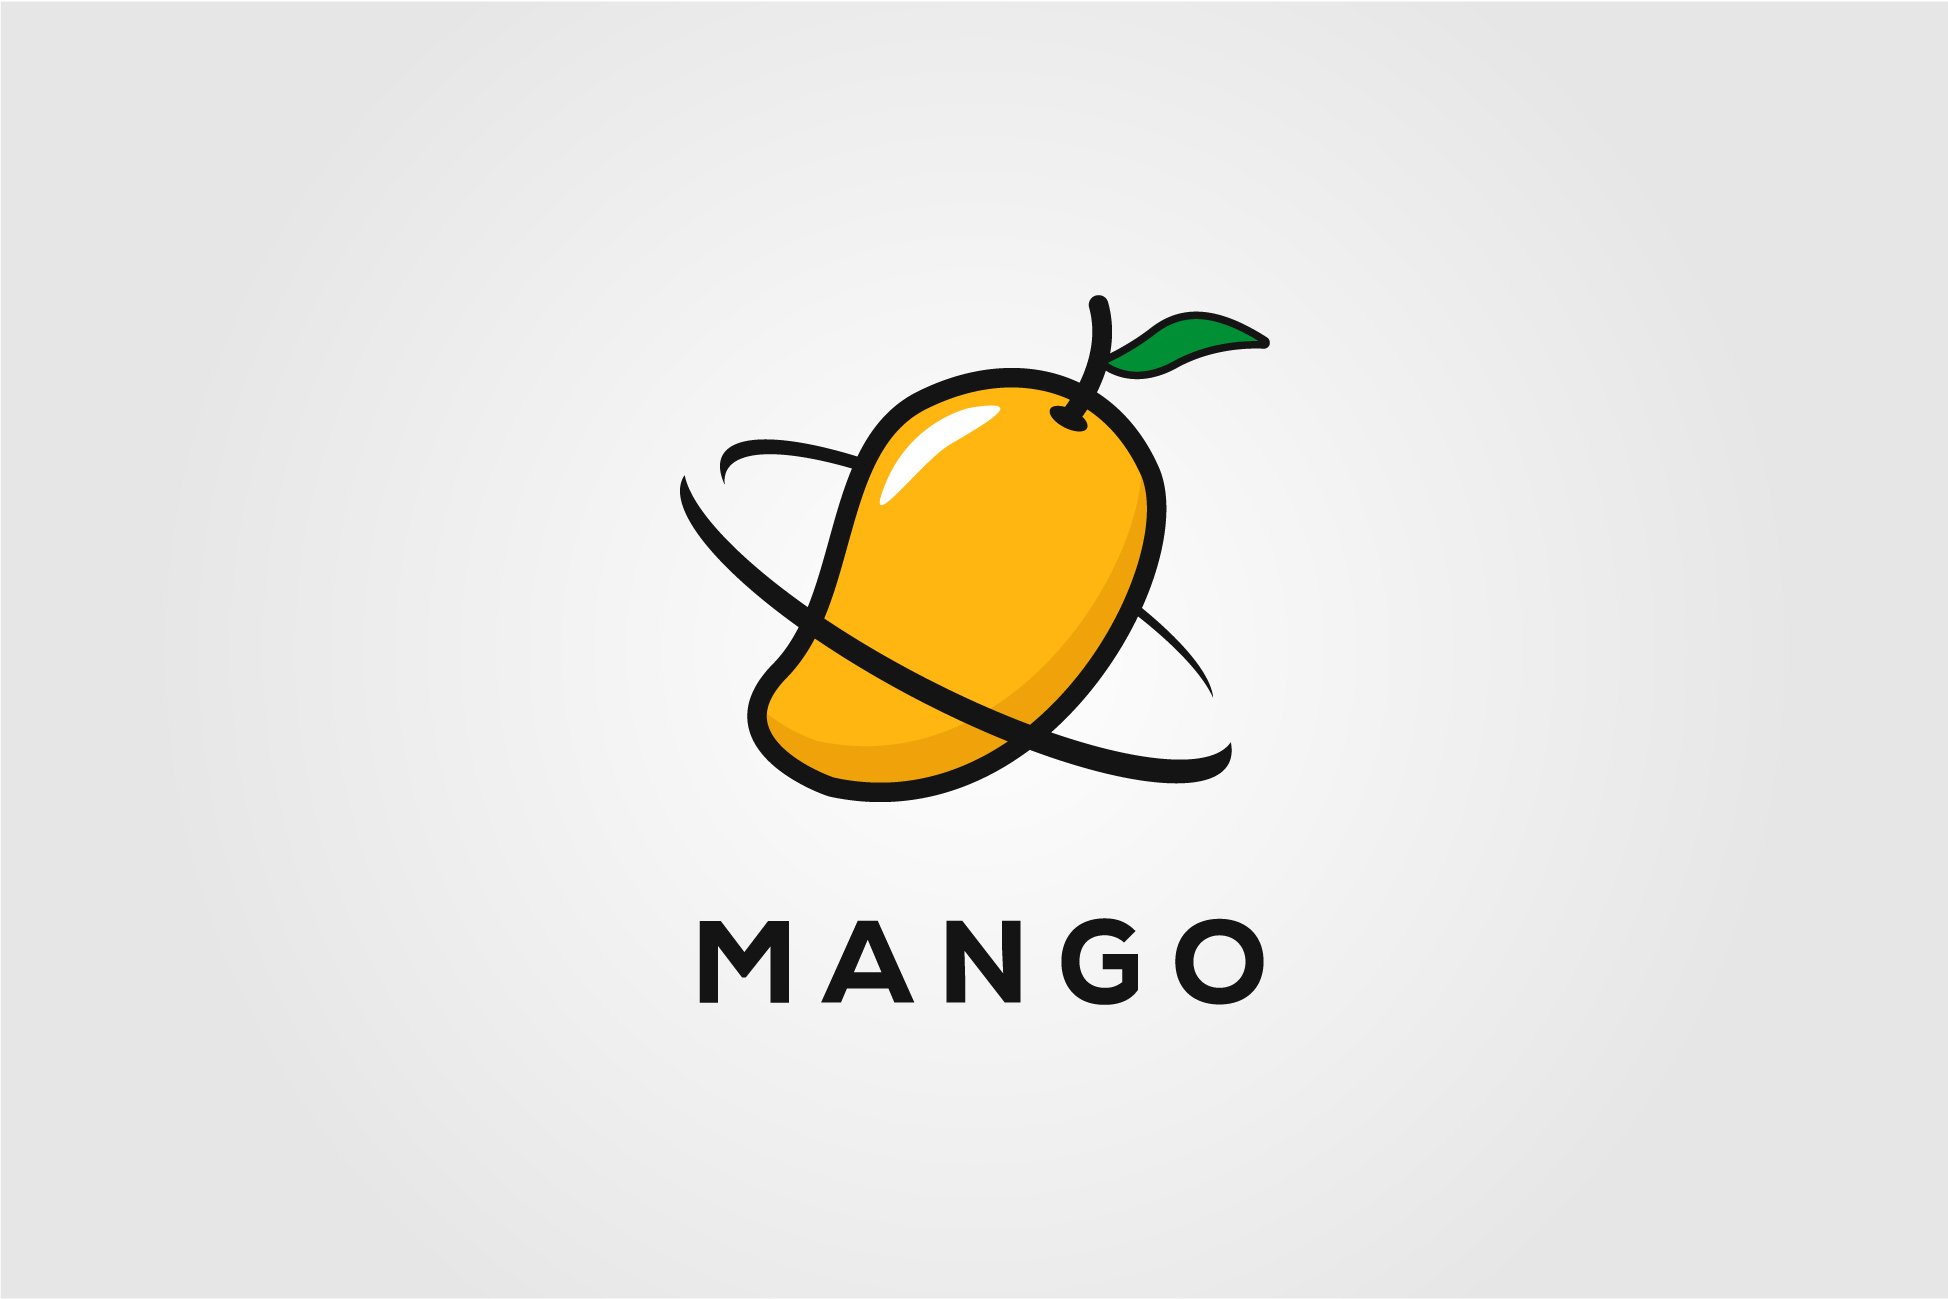 mango fruit logo vector designs cover image.